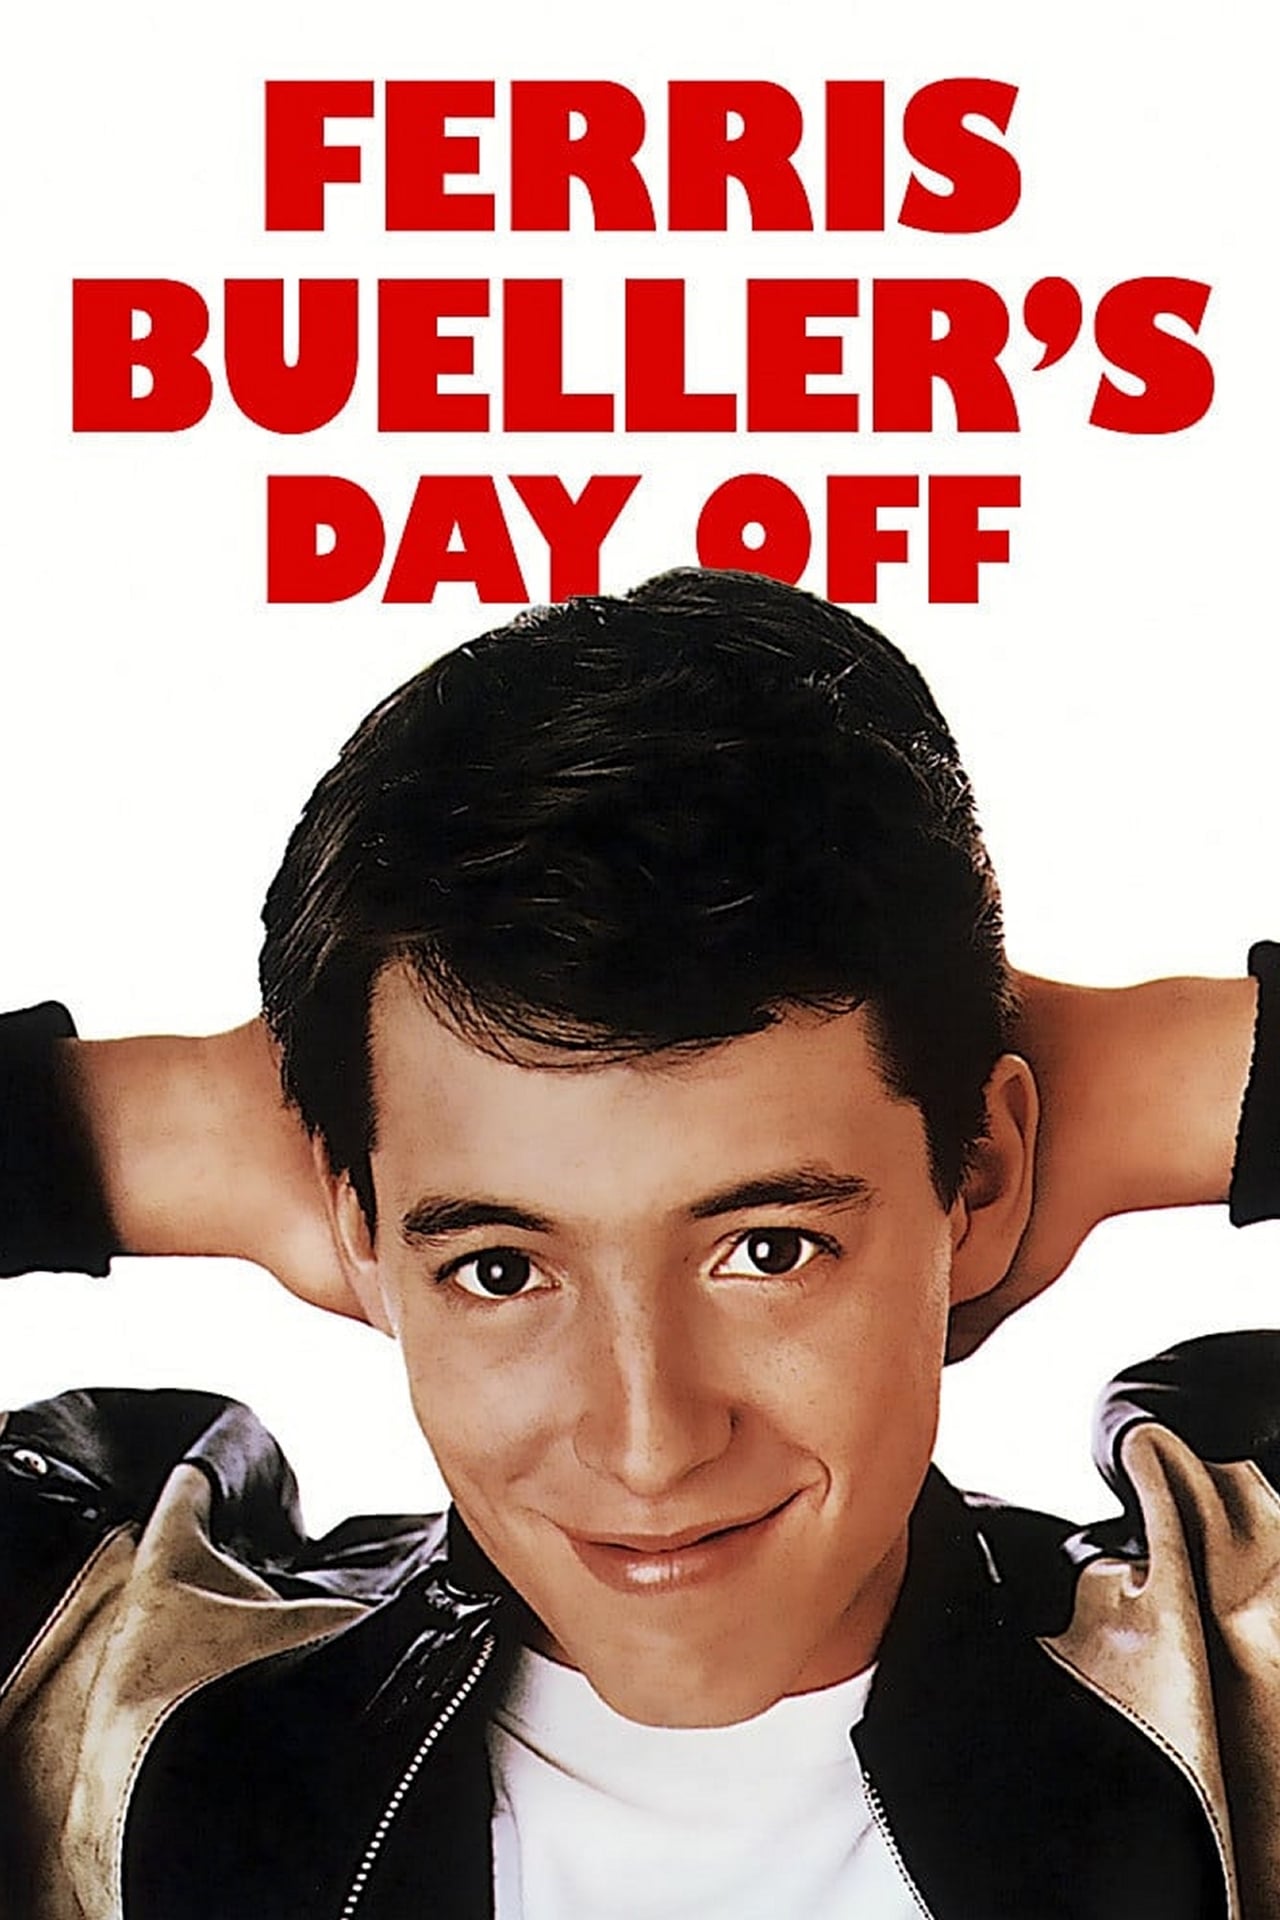 Берет выходной. Феррис бьюллер. Ferris Bueller's Day off 1986. Феррис бьюллер выходной. Феррис бьюллер берет выходной.